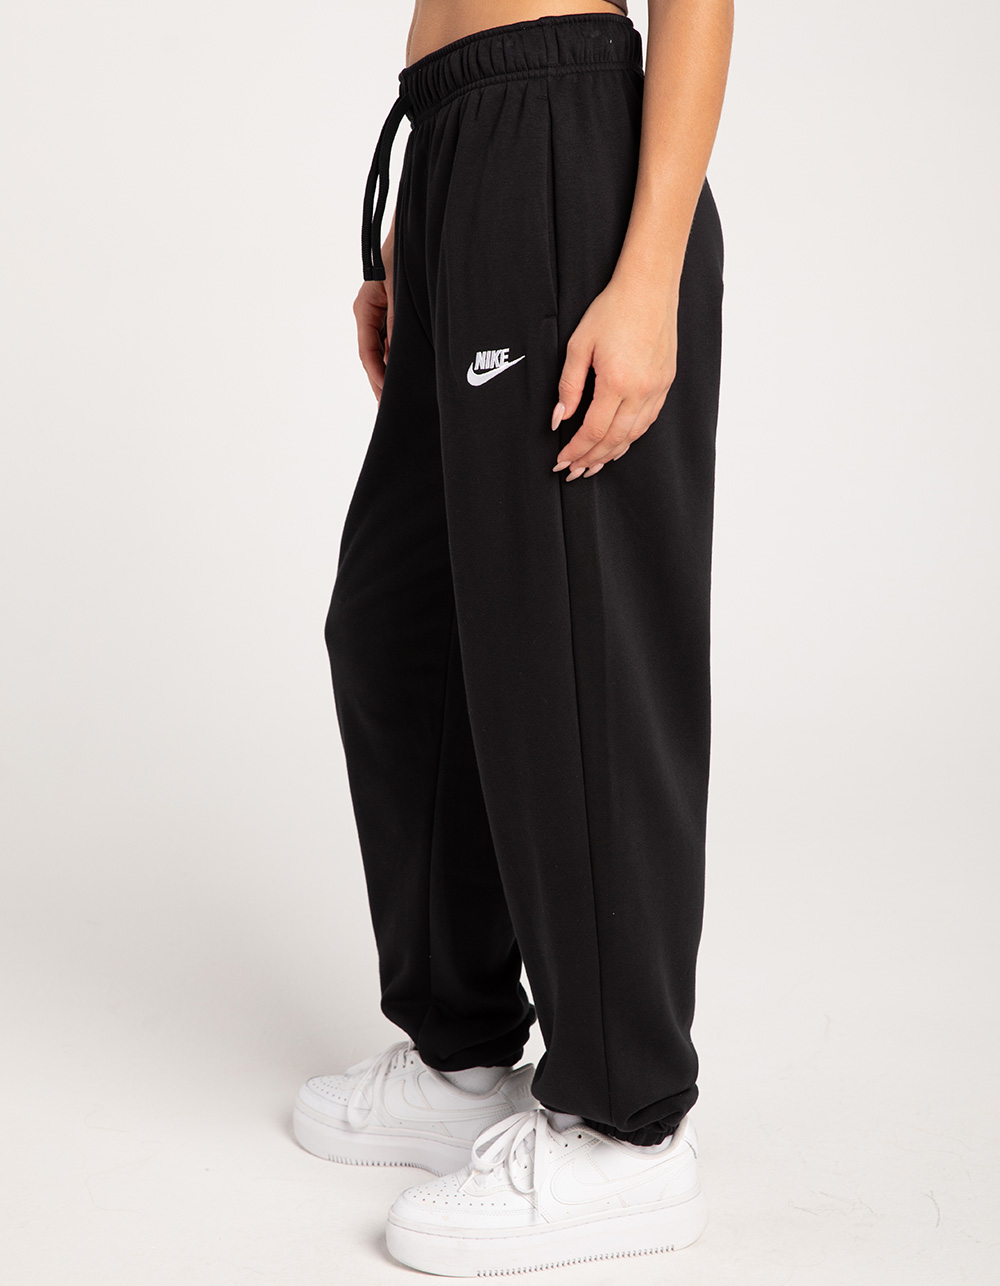 Women’s small black Nike sweatpants